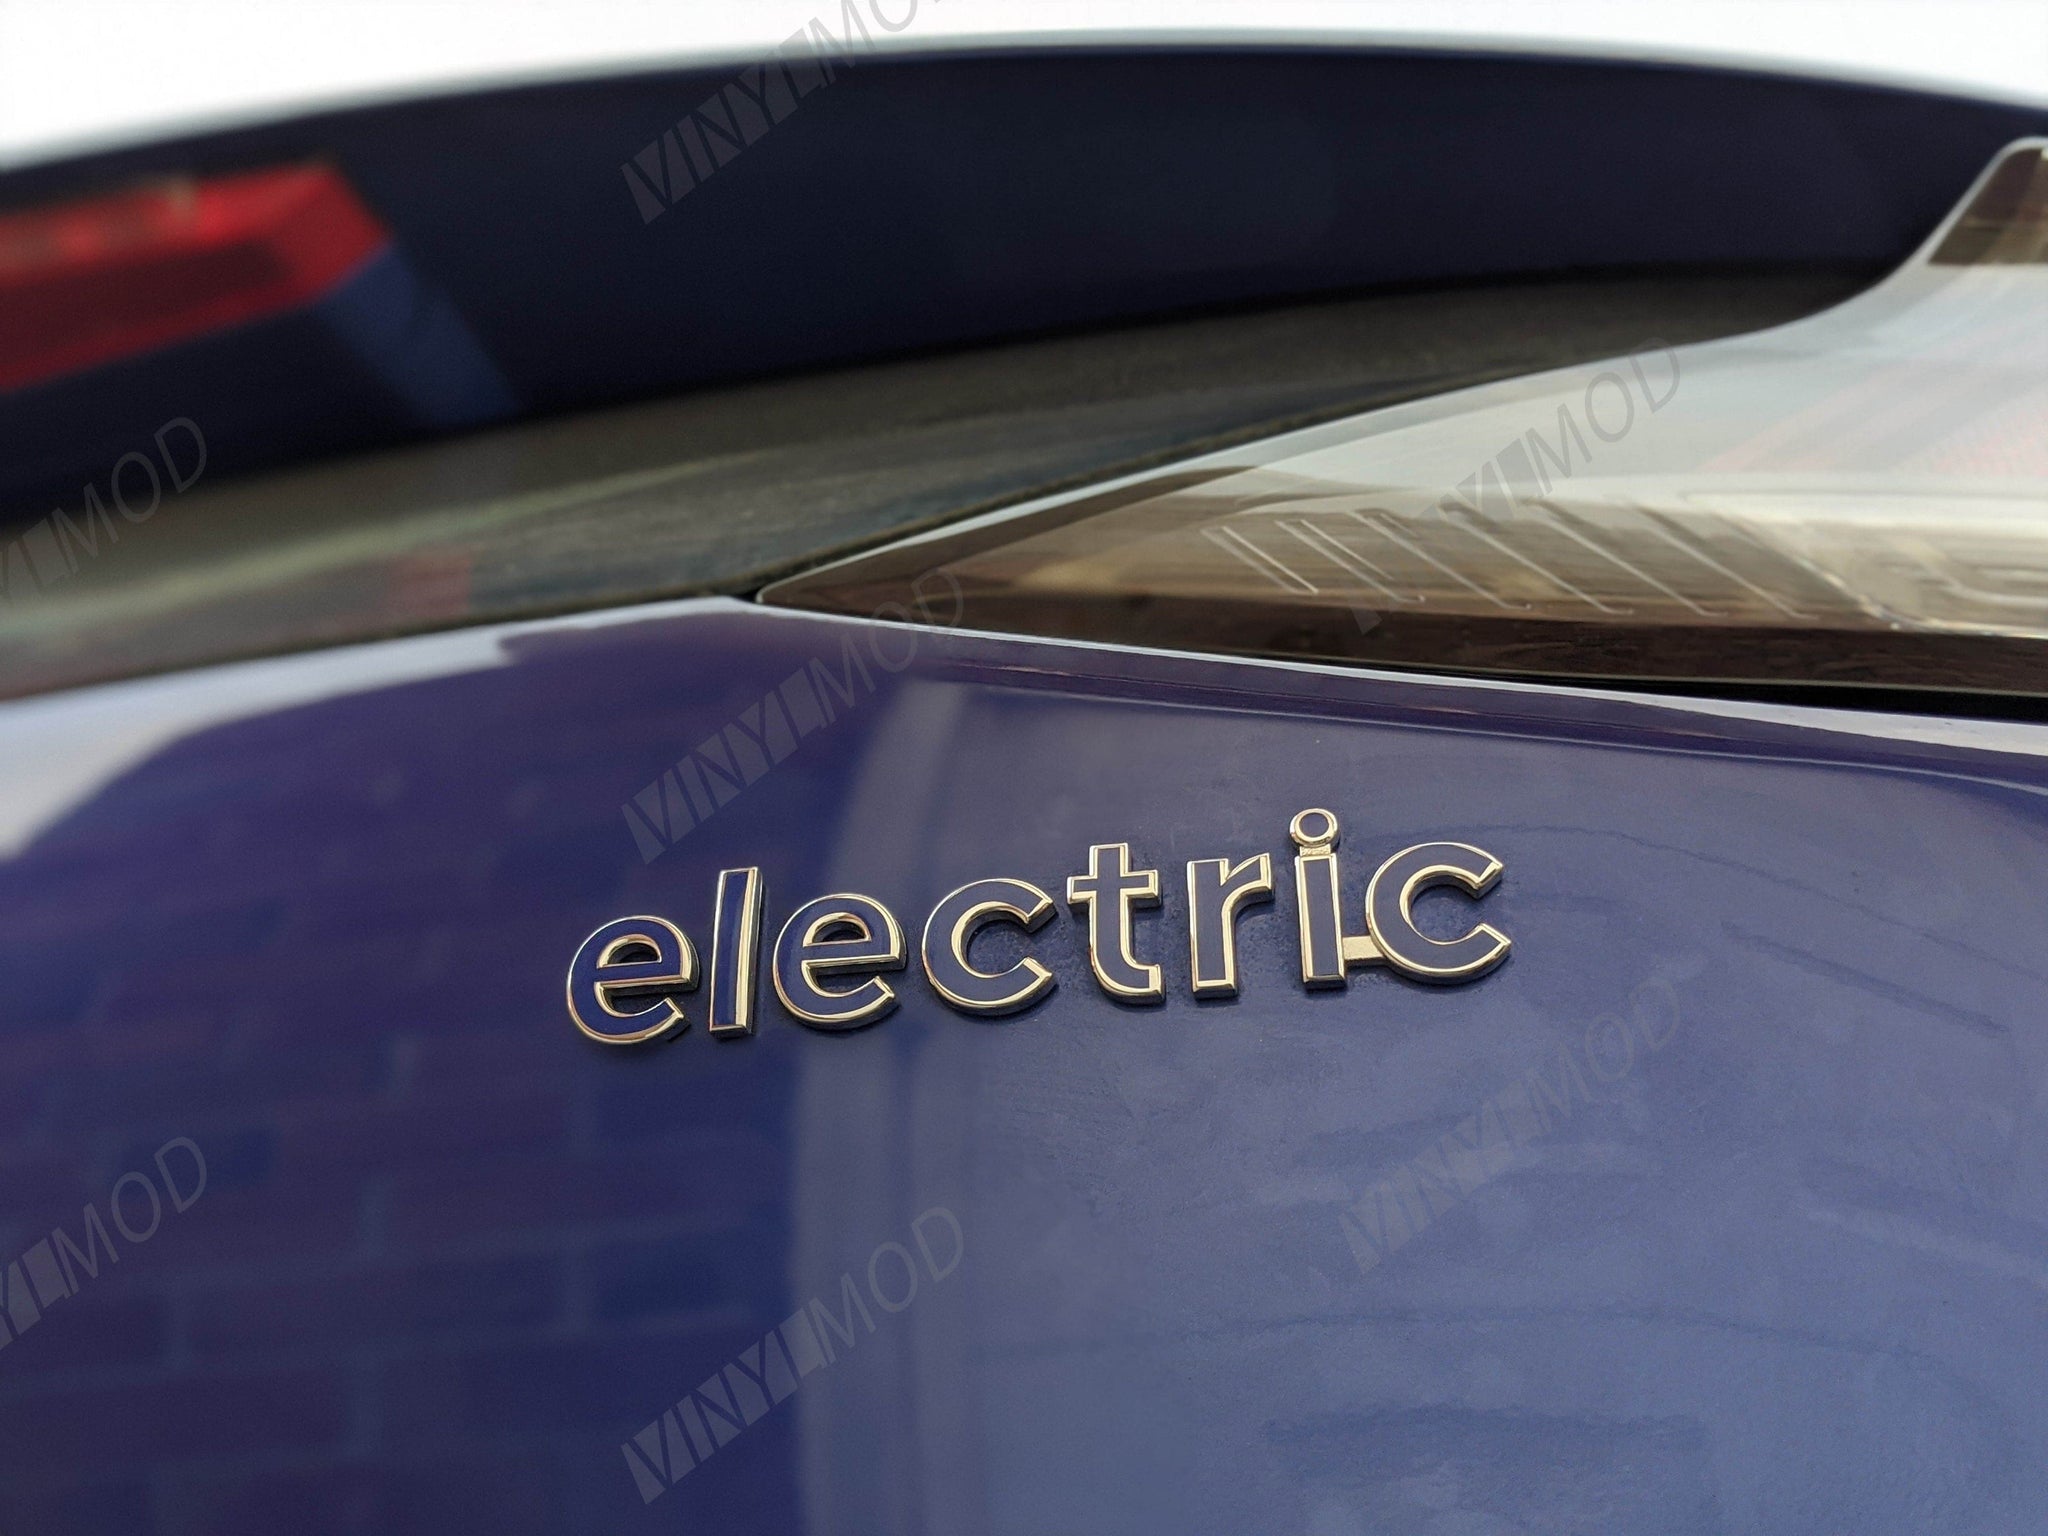 2020+ (1st Gen) Hyundai Ioniq Electric - Rear Elec tric Emblem VinylMod Overlays